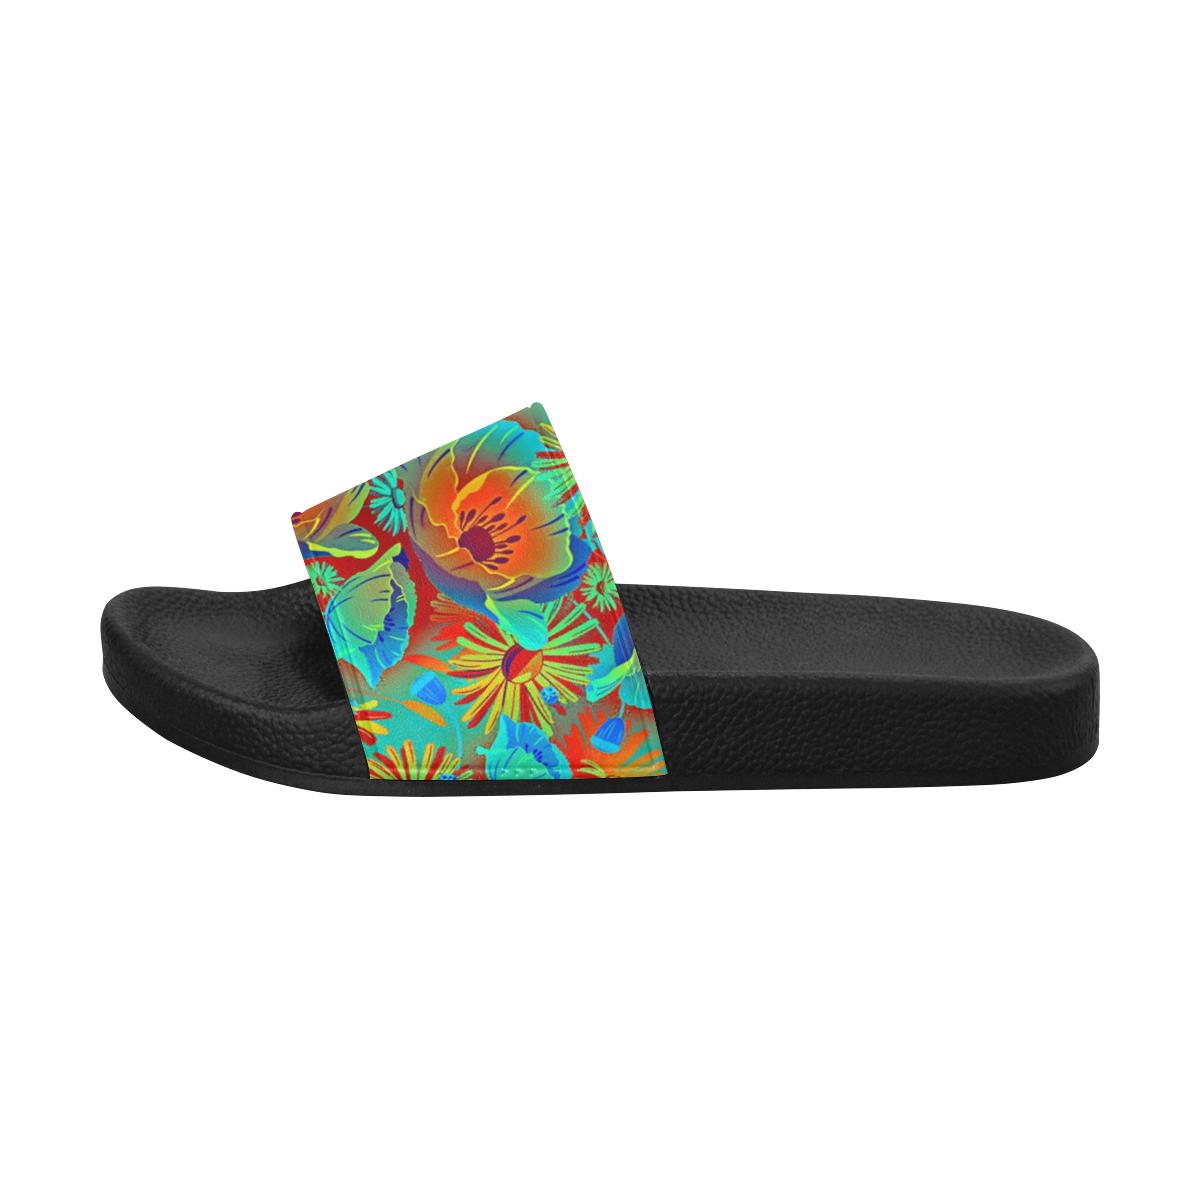 bright tropical floral Women's Slide Sandals (Model 057)